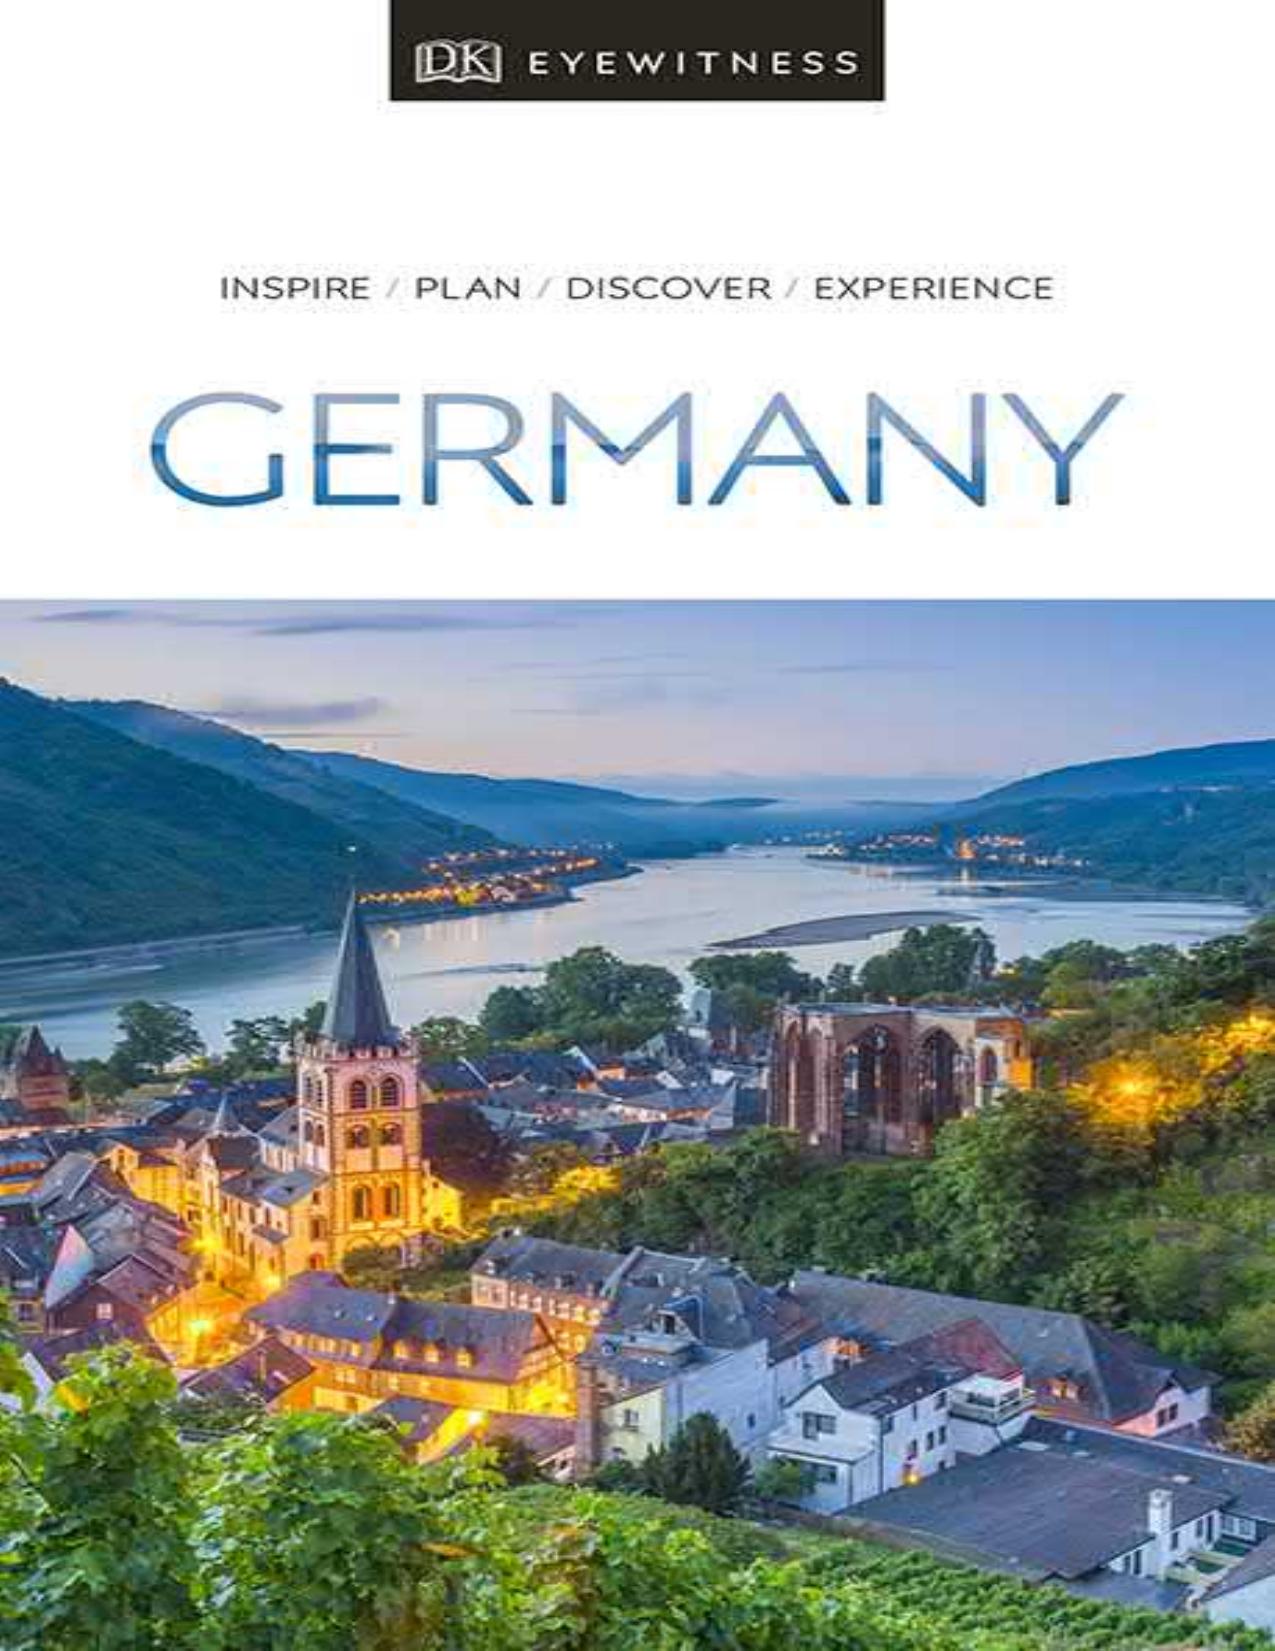 DK Eyewitness Travel Guide Germany by DK Travel